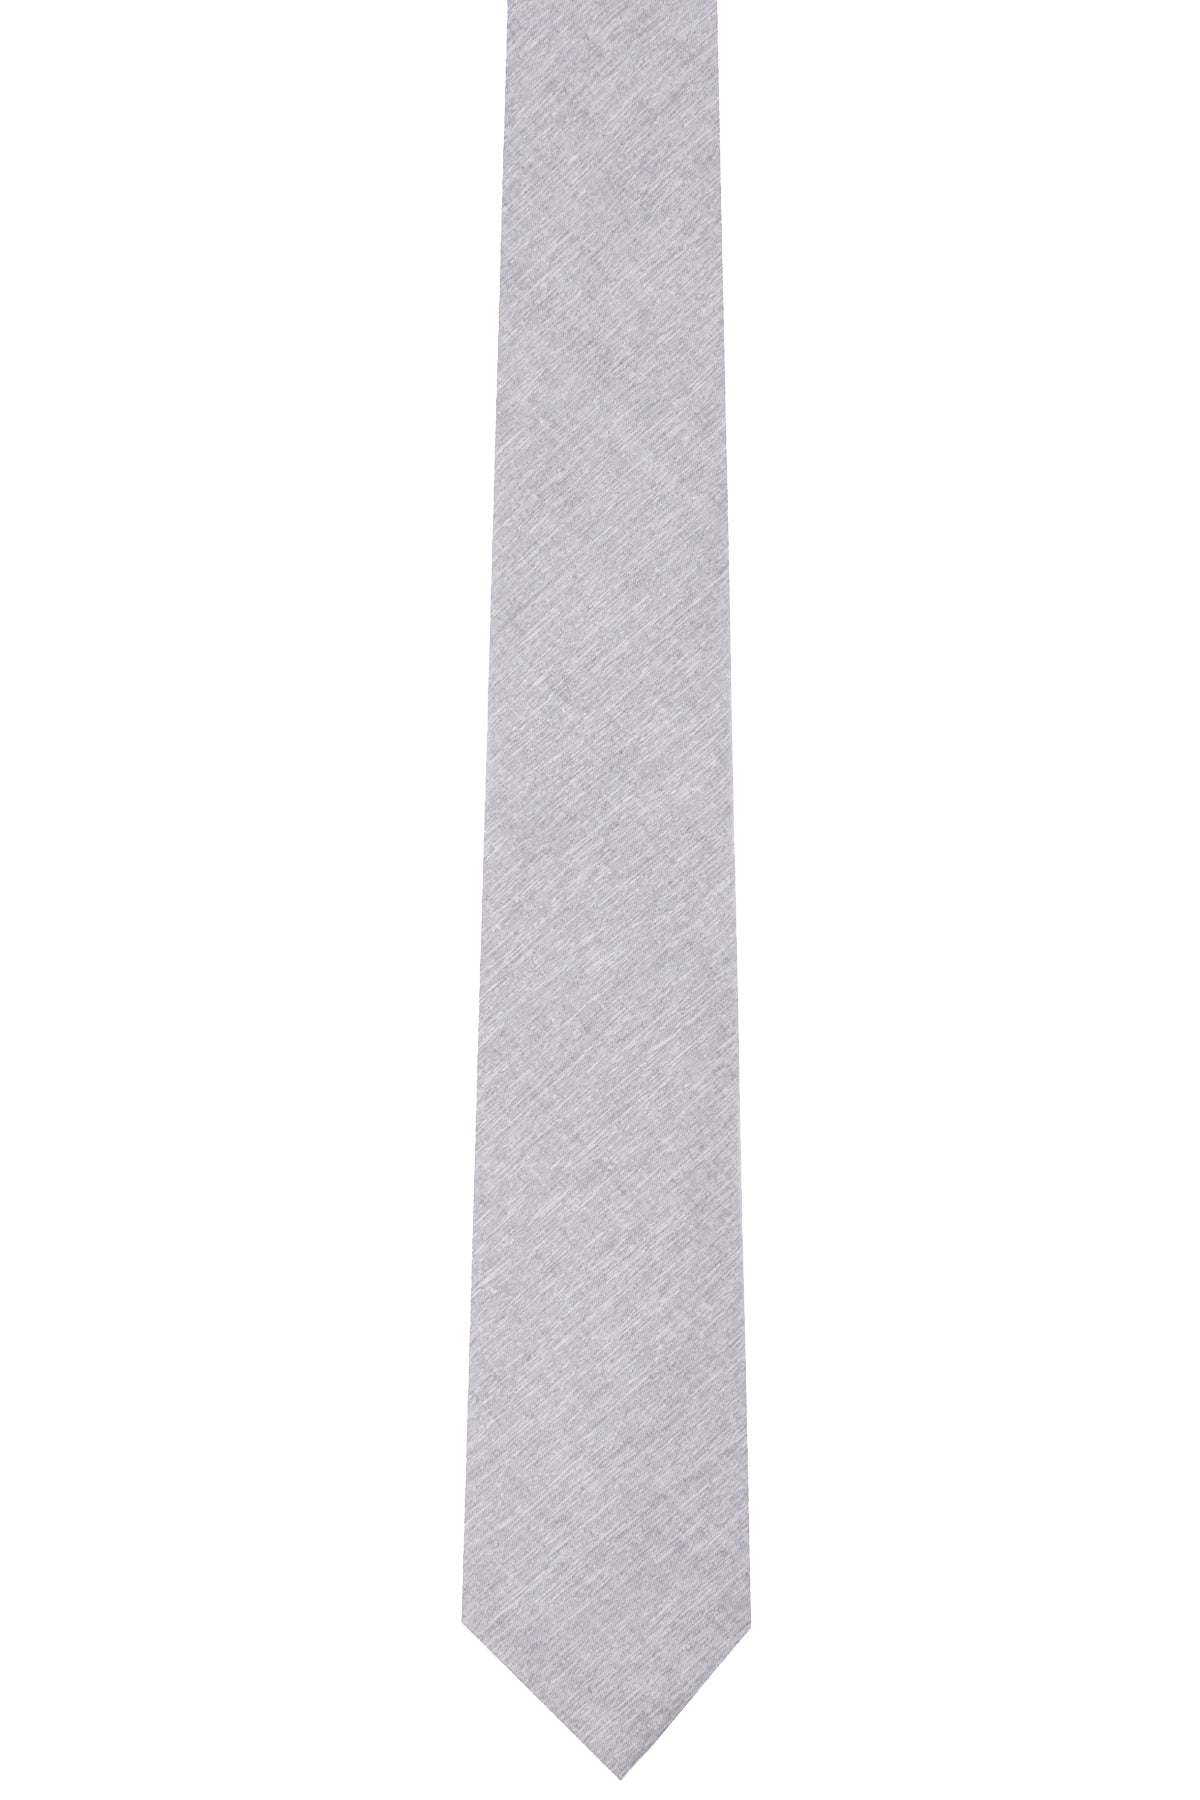 BAR III Grey Beach Solid Skinny Tie